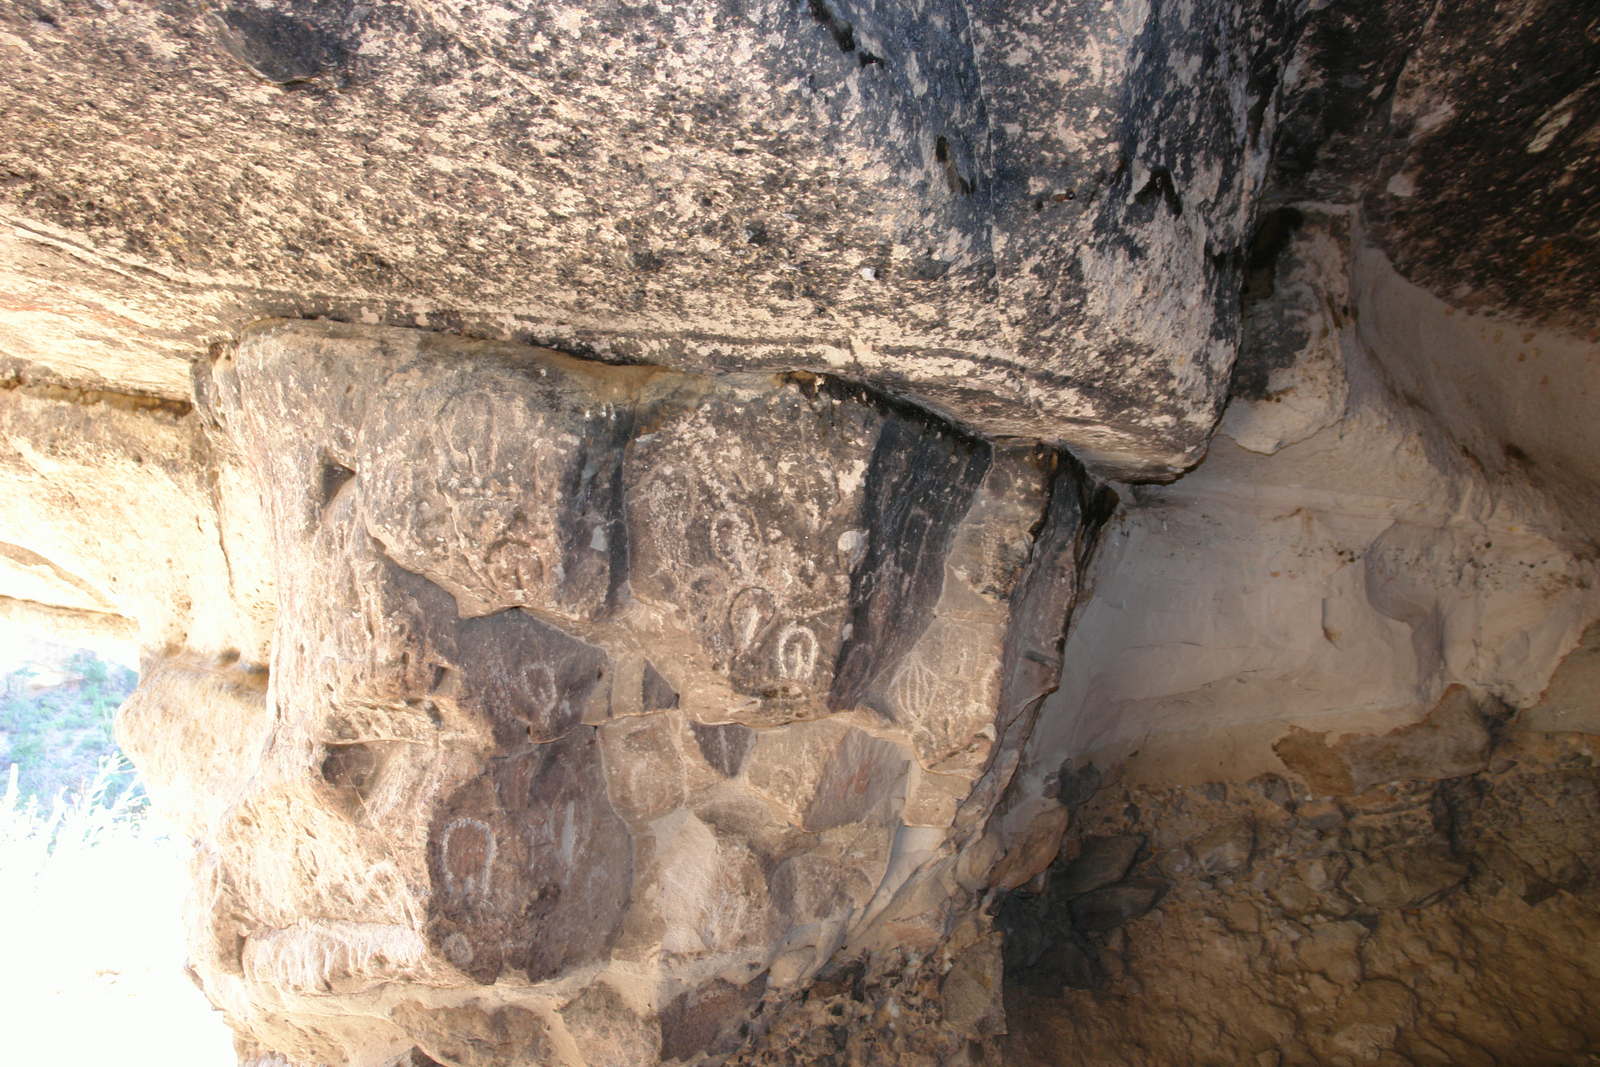 Vulvaform petroglyphs carved into the soft tuff walls.